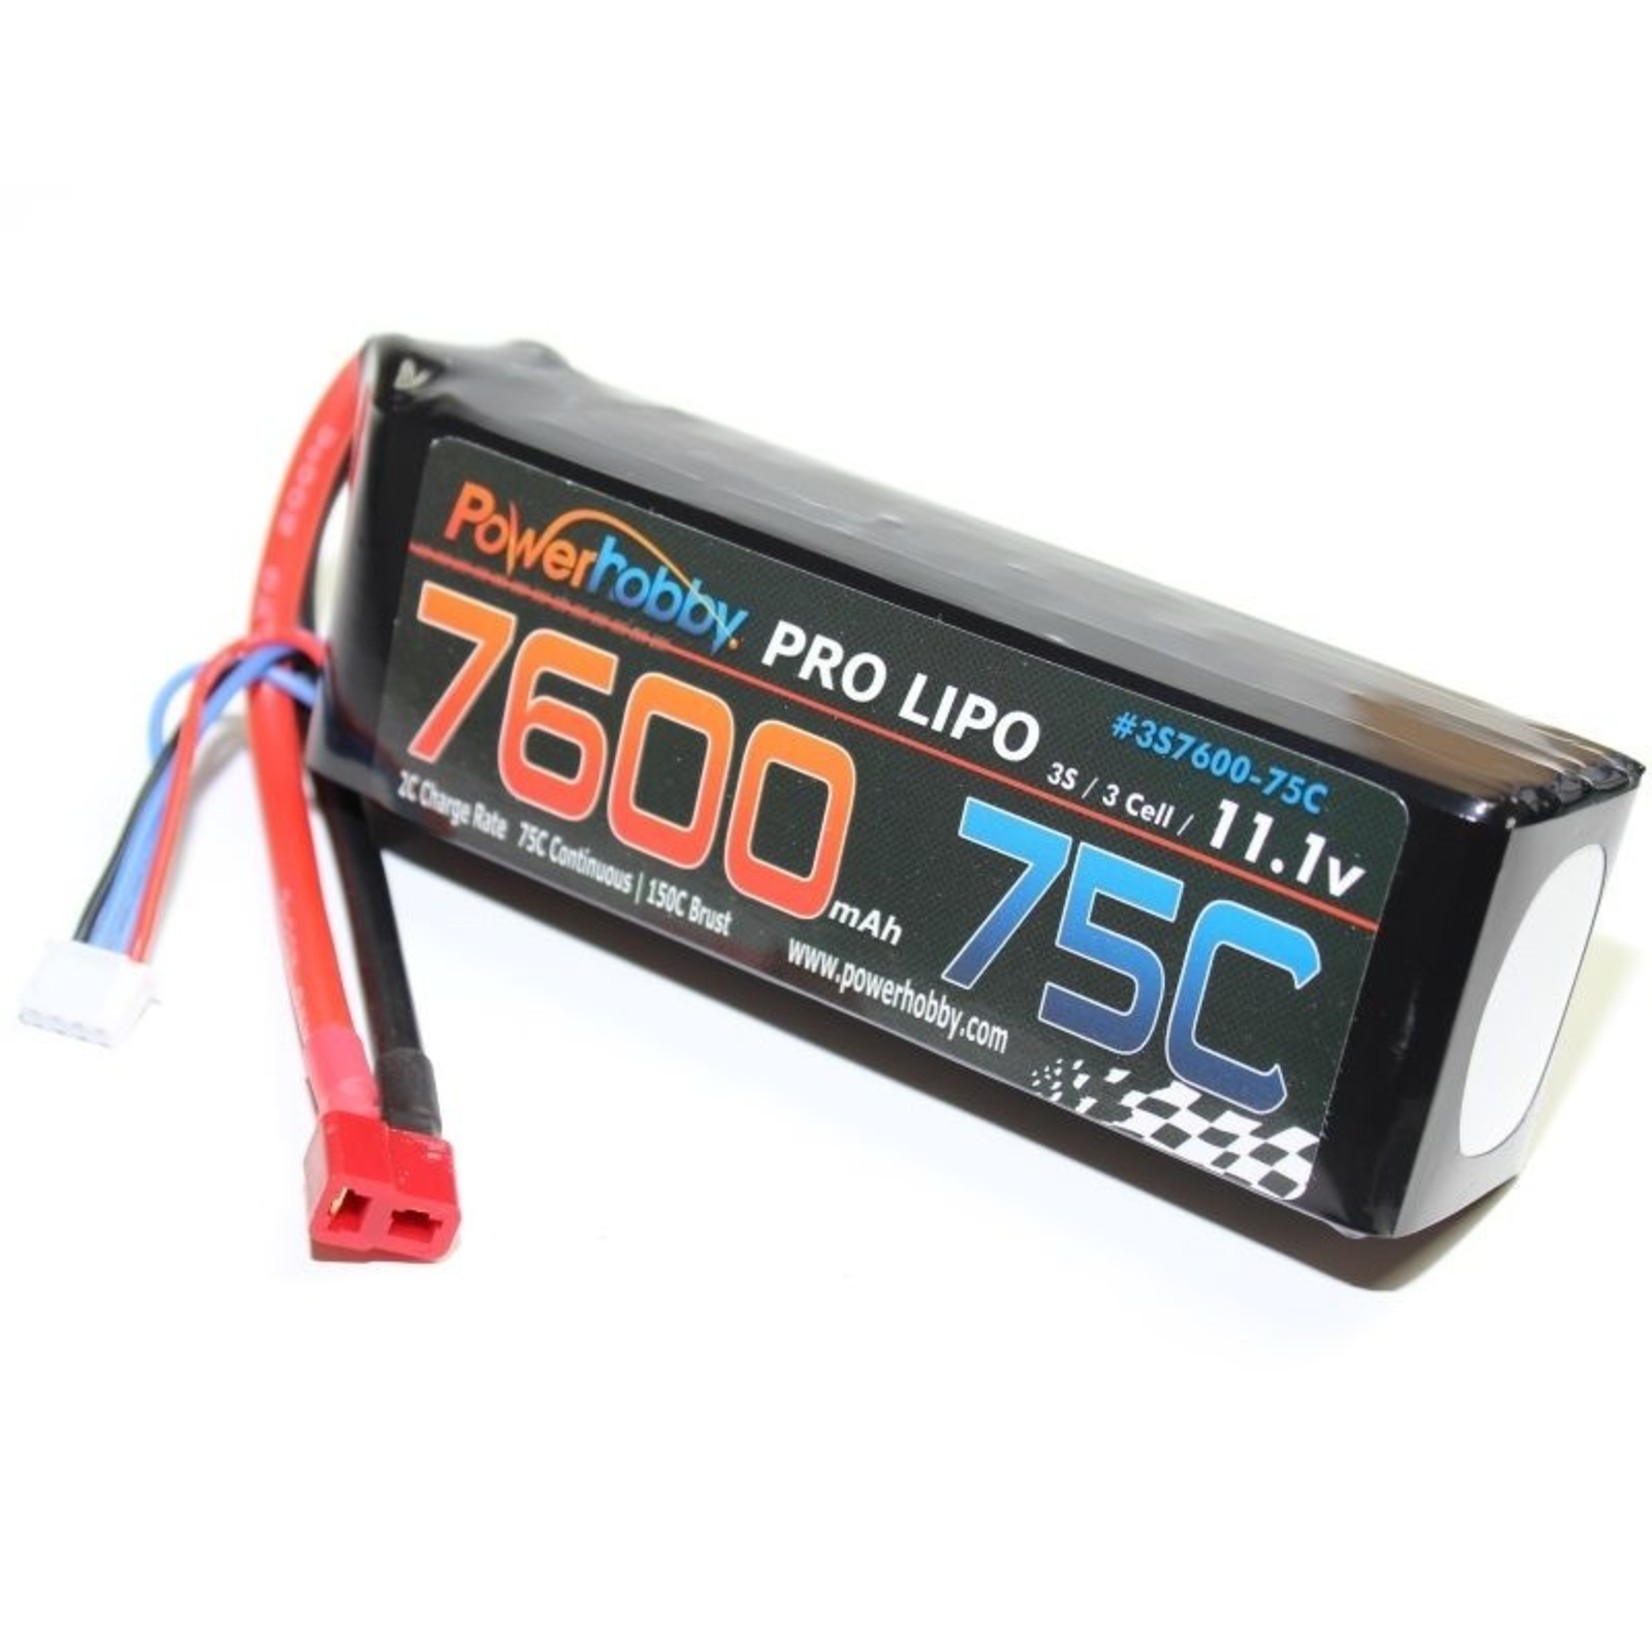 Power Hobby PHB3S760075CDNS - 7600mAh 11.1V 3S 75C LiPo Battery with Hardwired T-Plug